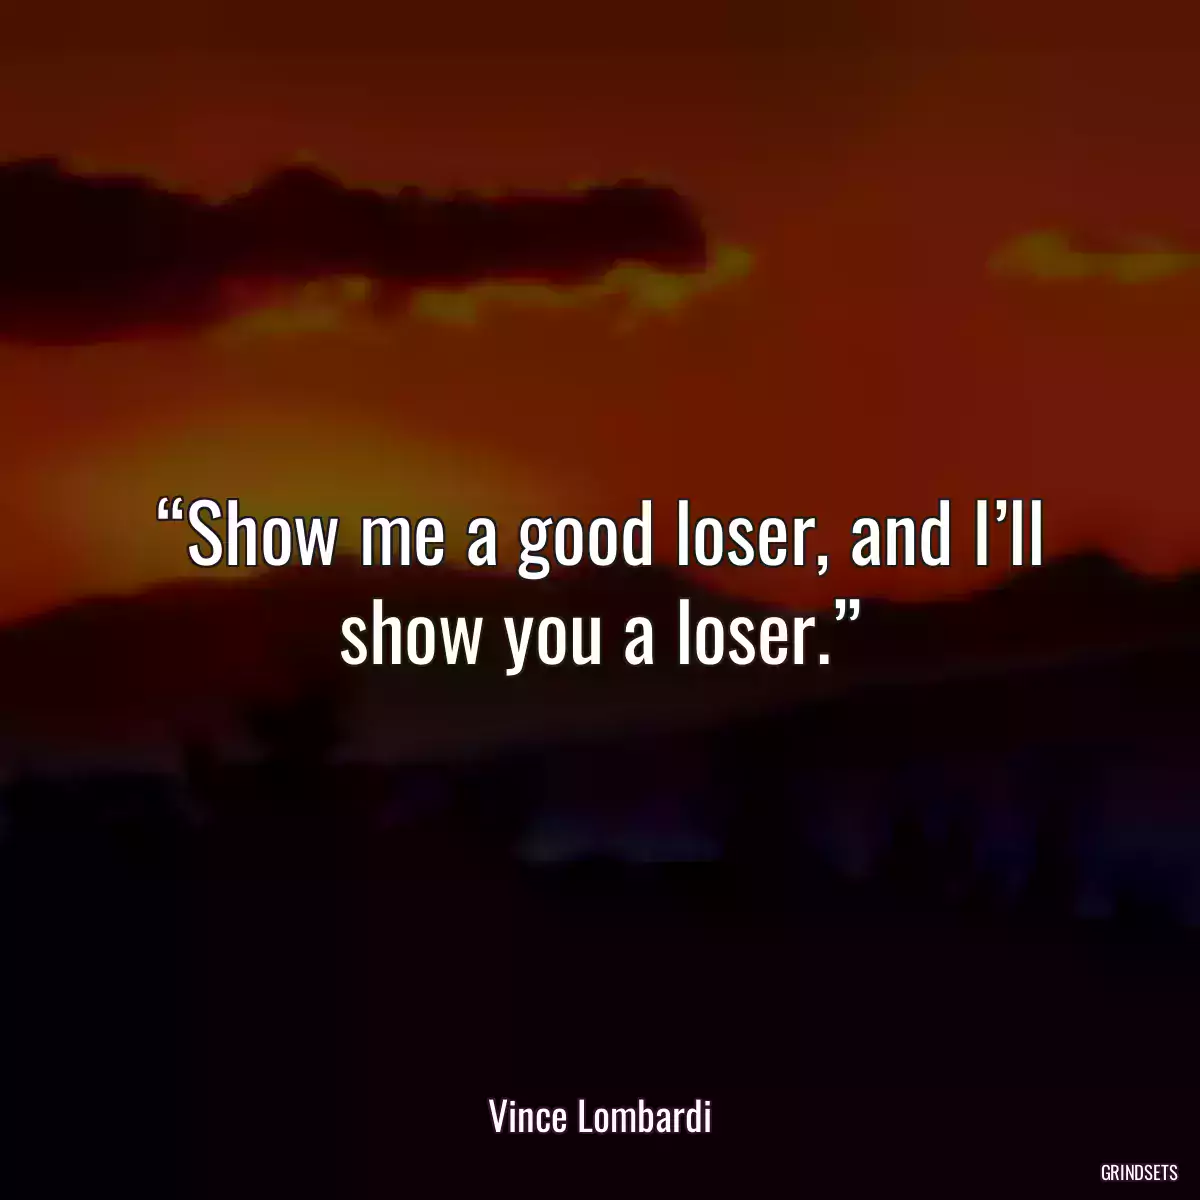 “Show me a good loser, and I’ll show you a loser.”